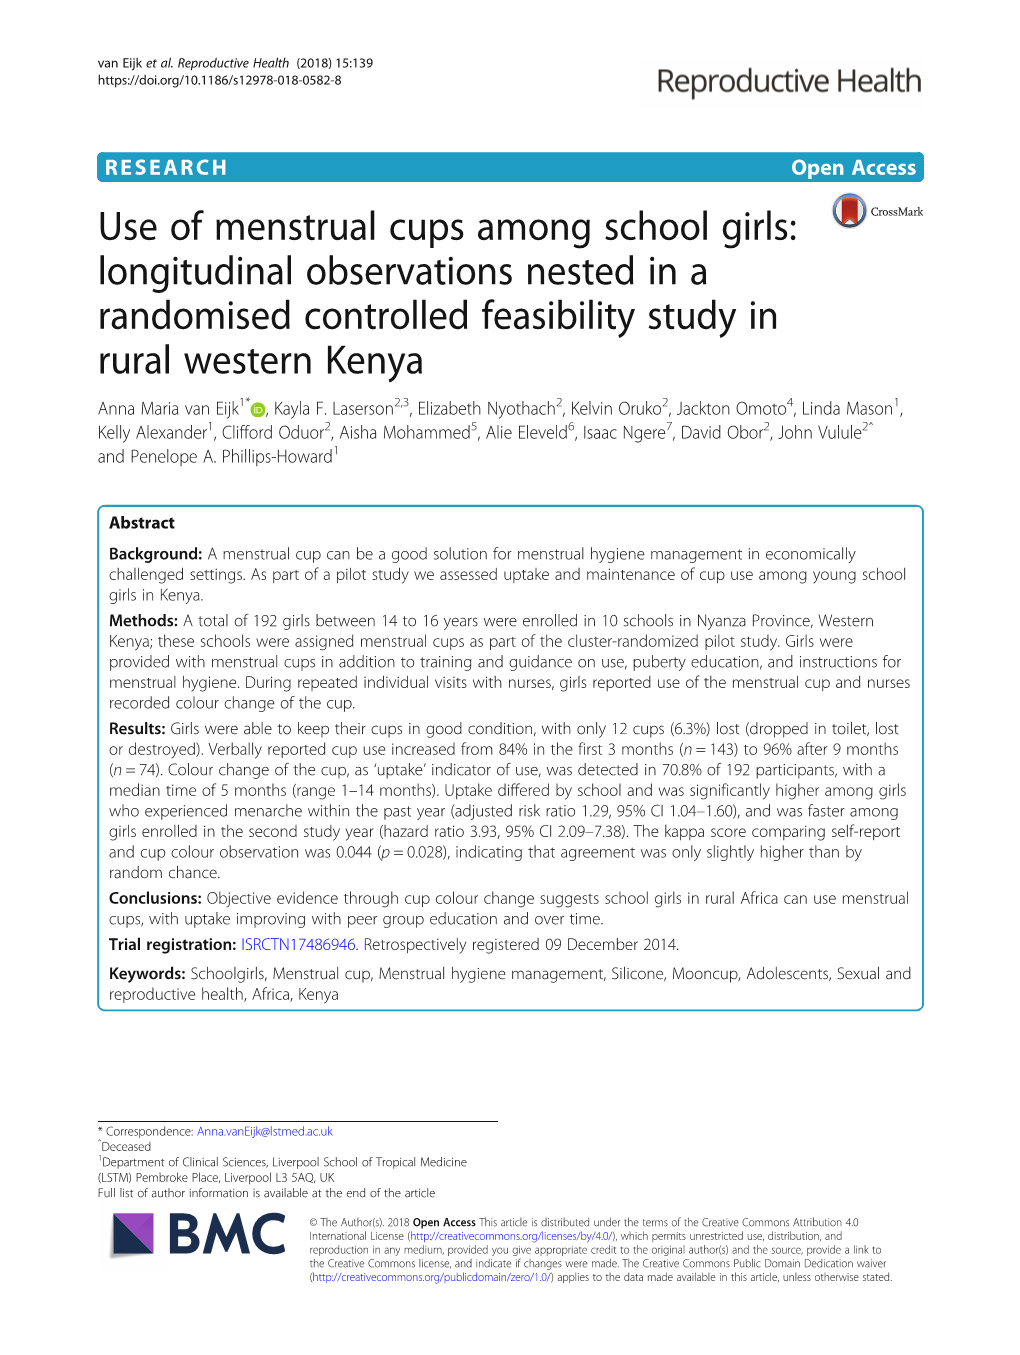 Use of Menstrual Cups Among School Girls